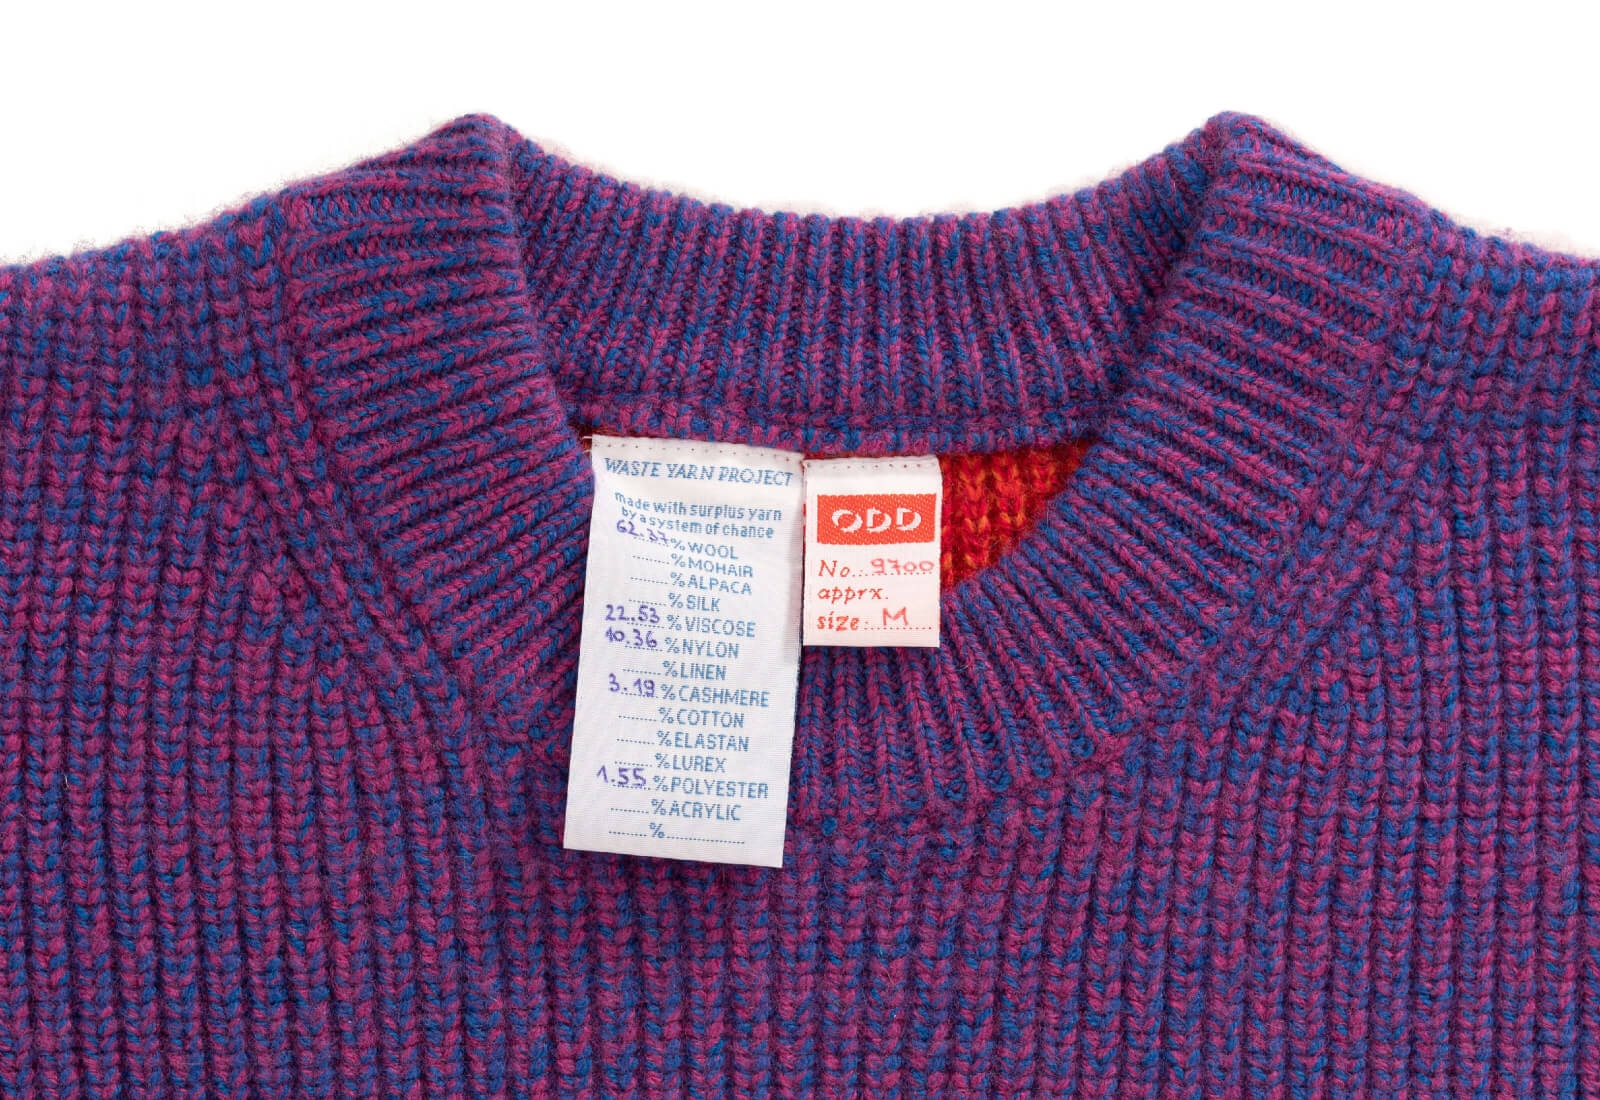 ODDS Sweater material closeup